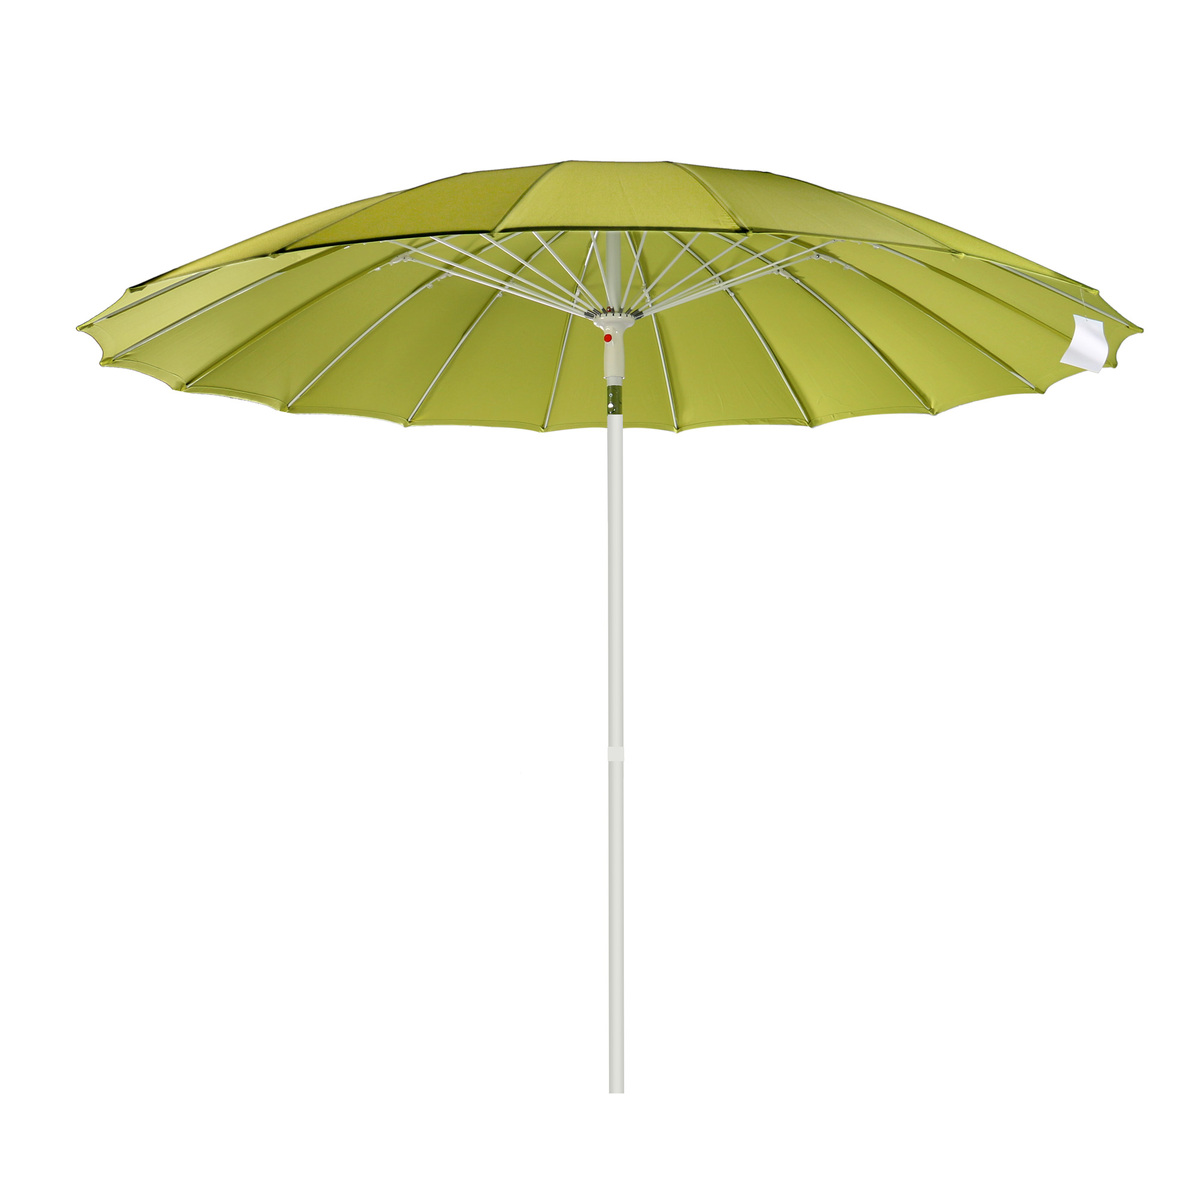 Campmate Beach Umbrella, Yellow, H2.30cm, U015